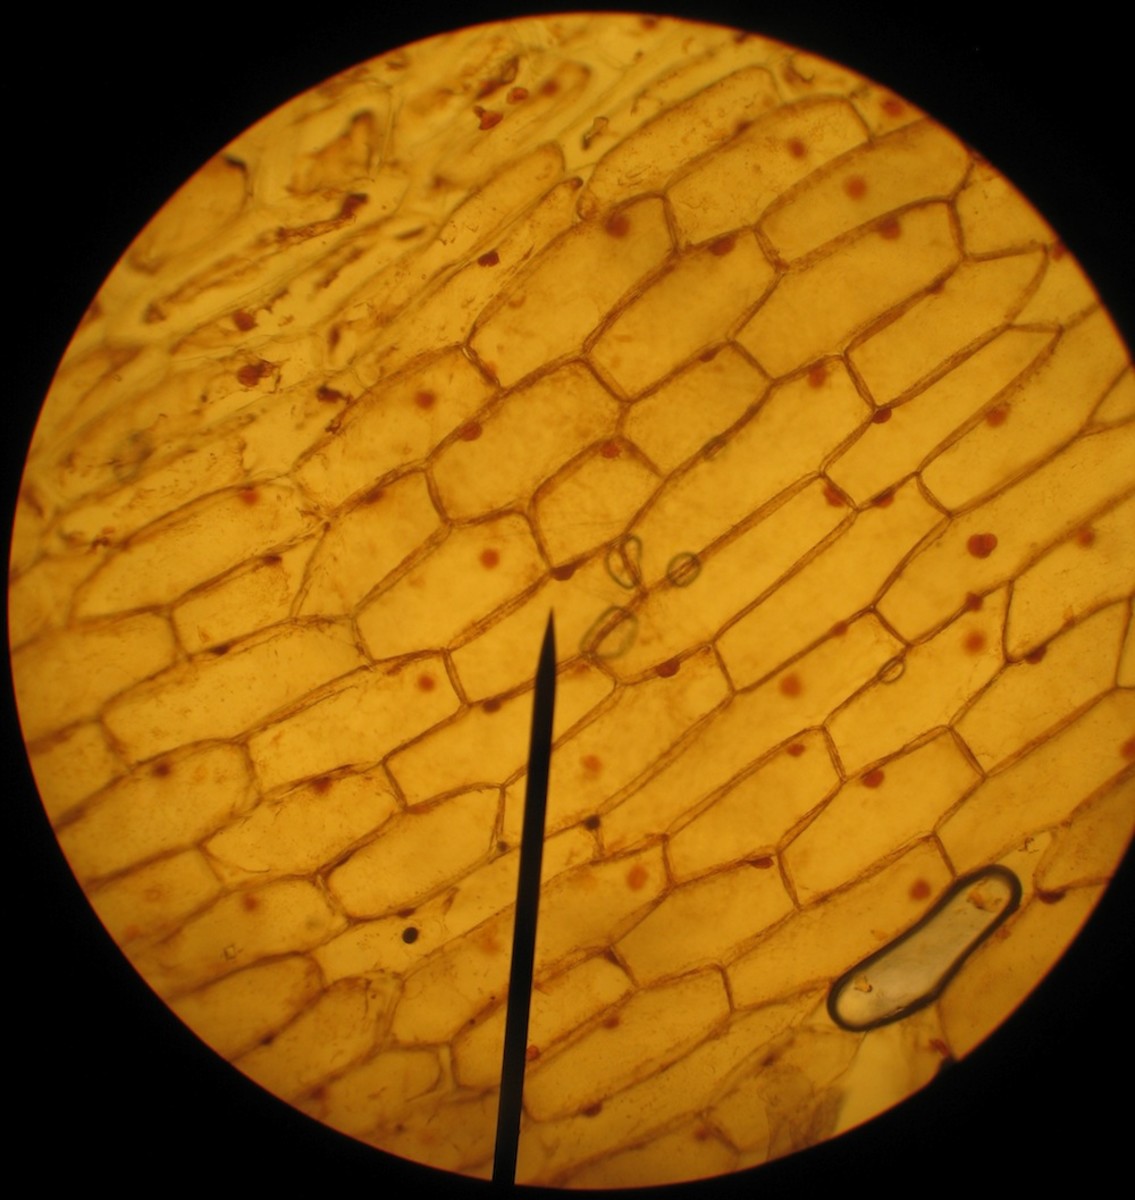 Onion skin under a microscope